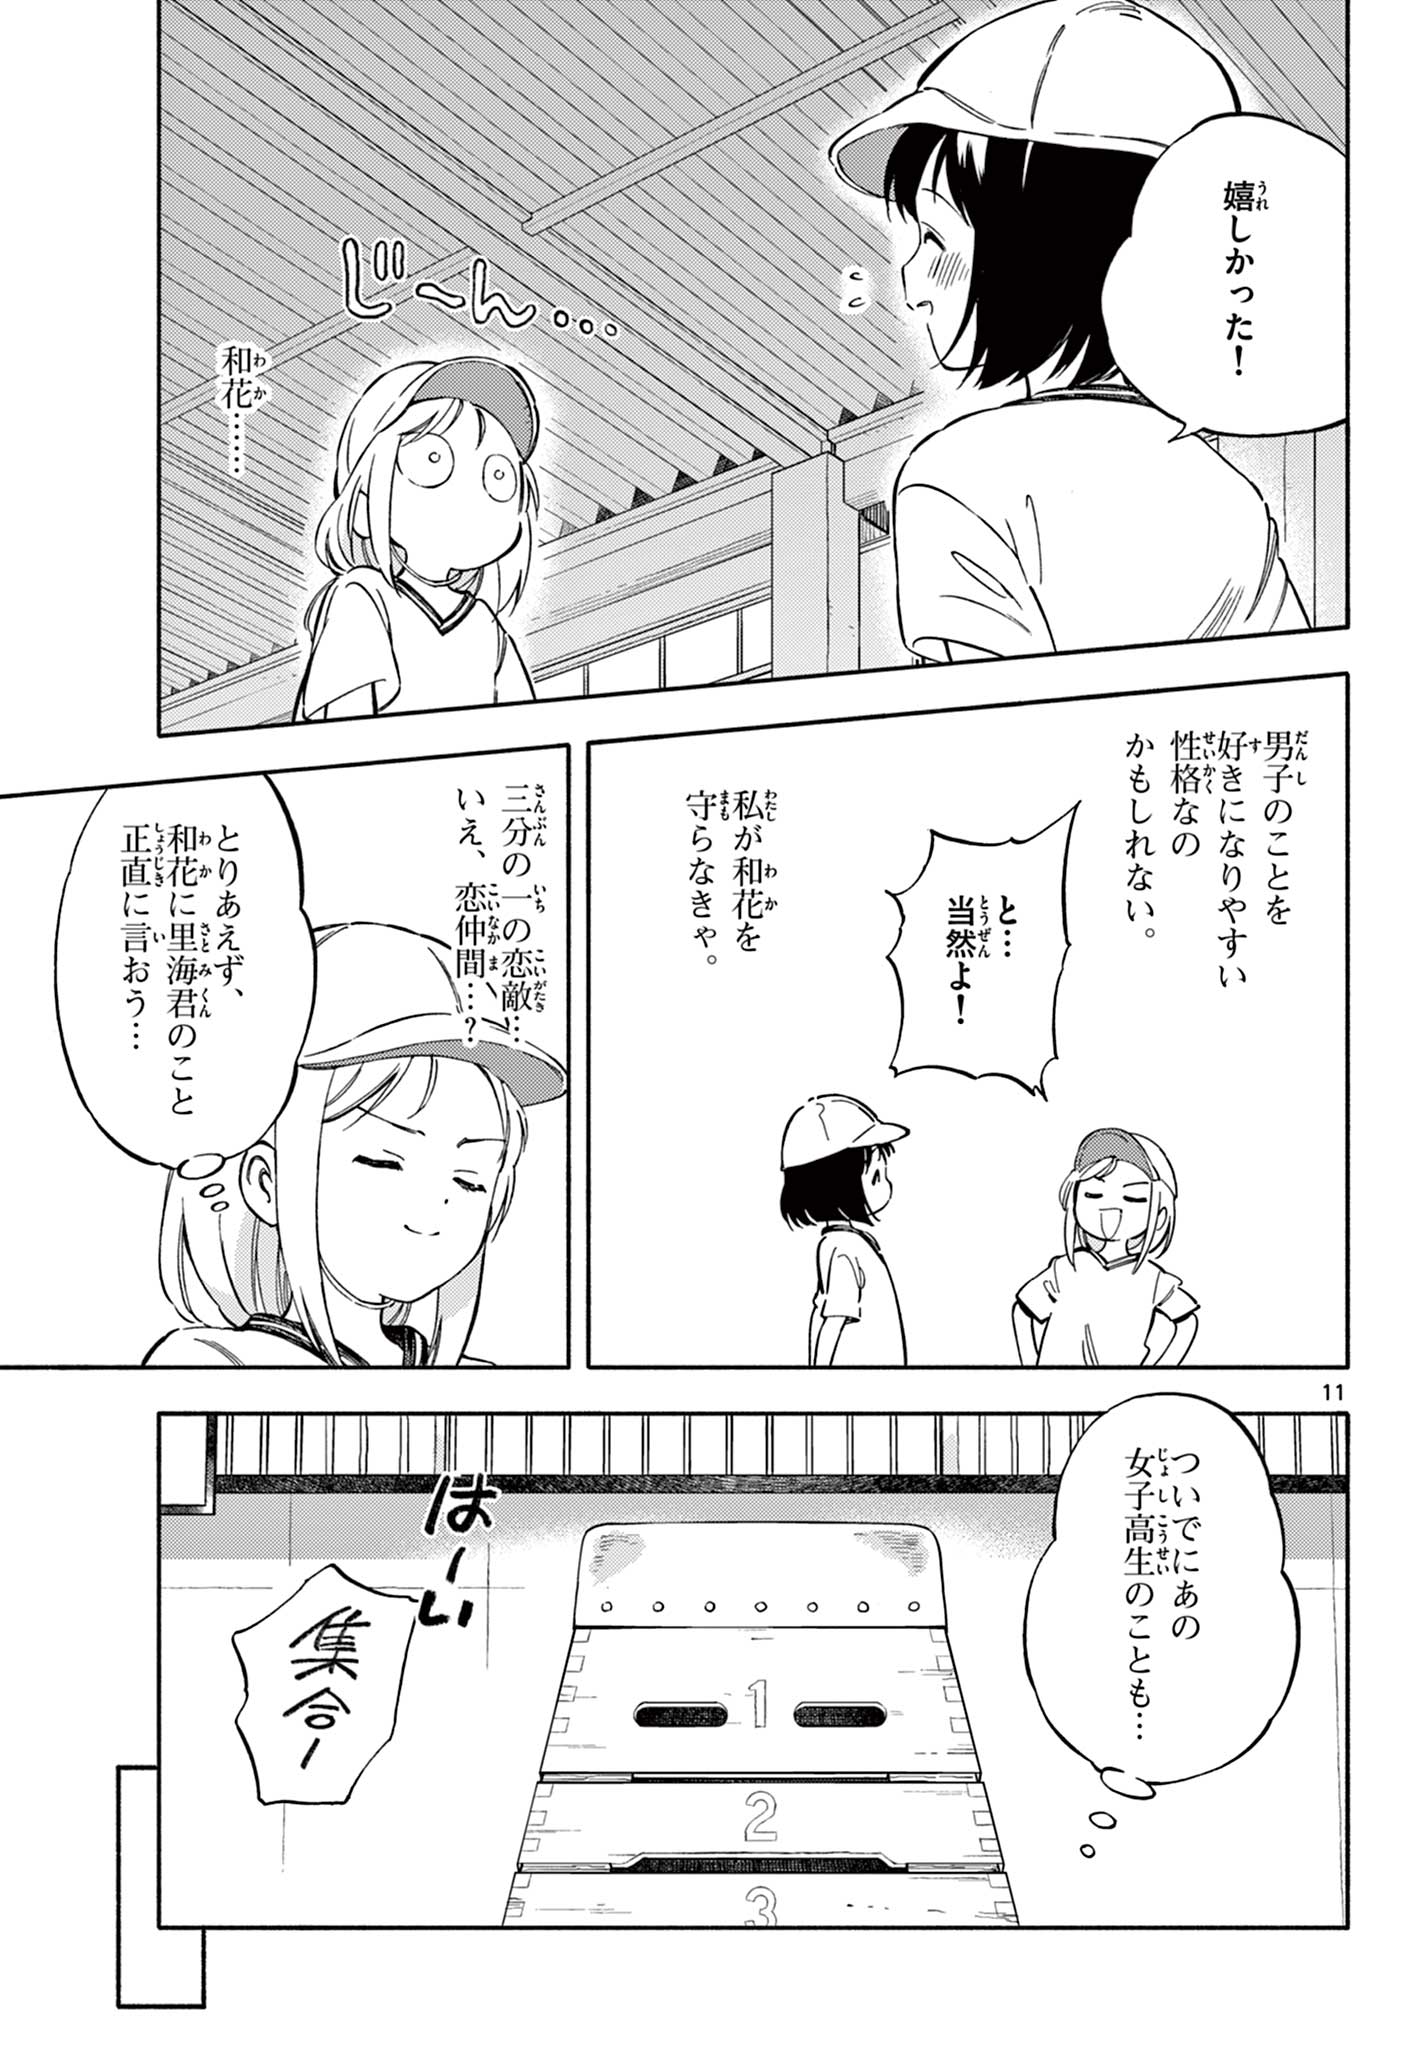 Nami no Shijima no Horizont - Chapter 15.1 - Page 11